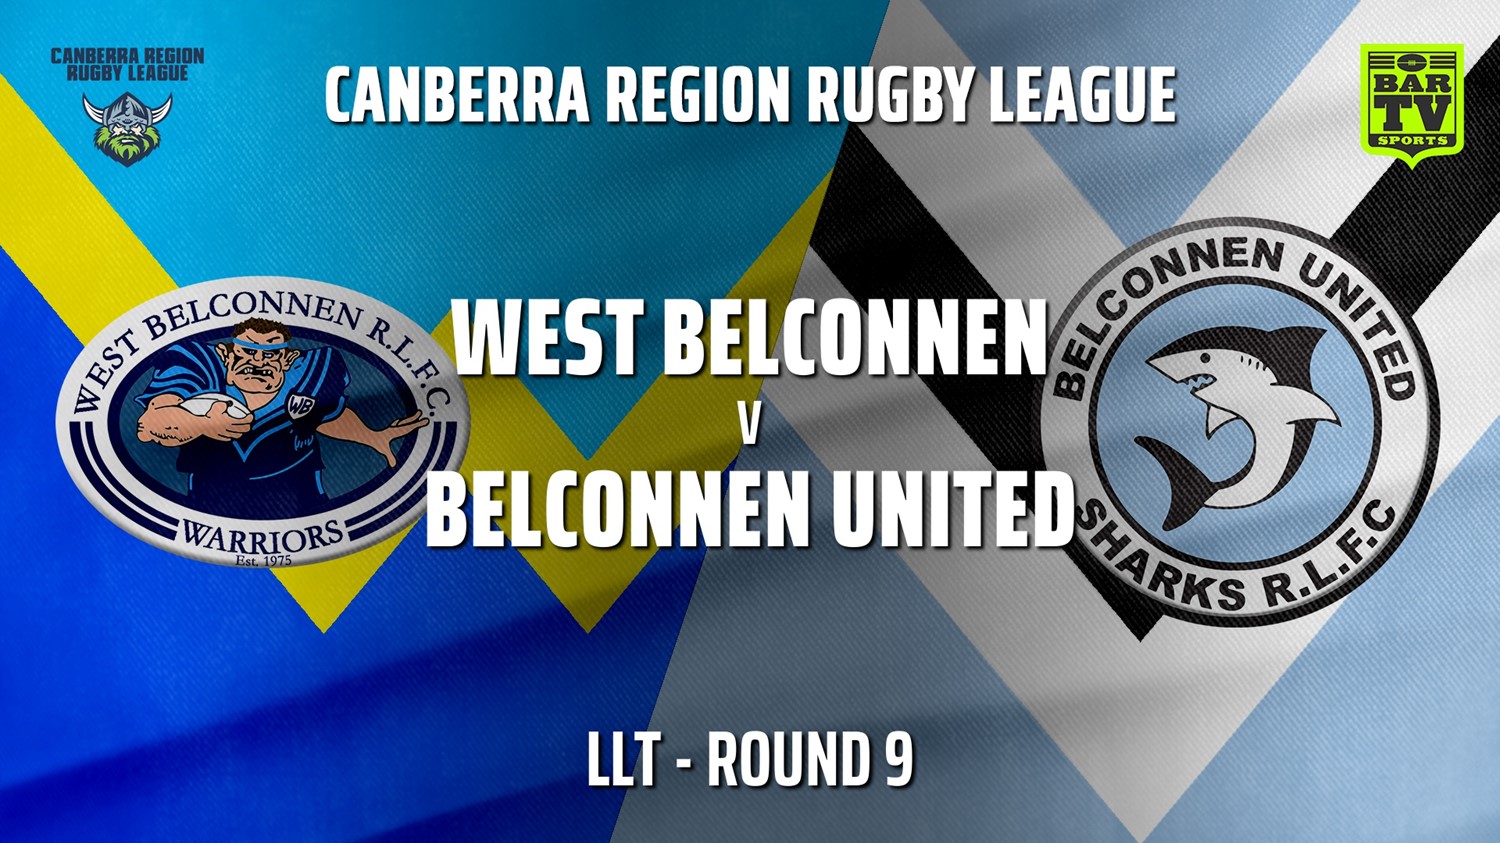 210620-Canberra Round 9 - LLT - West Belconnen Warriors v Belconnen United Sharks Slate Image